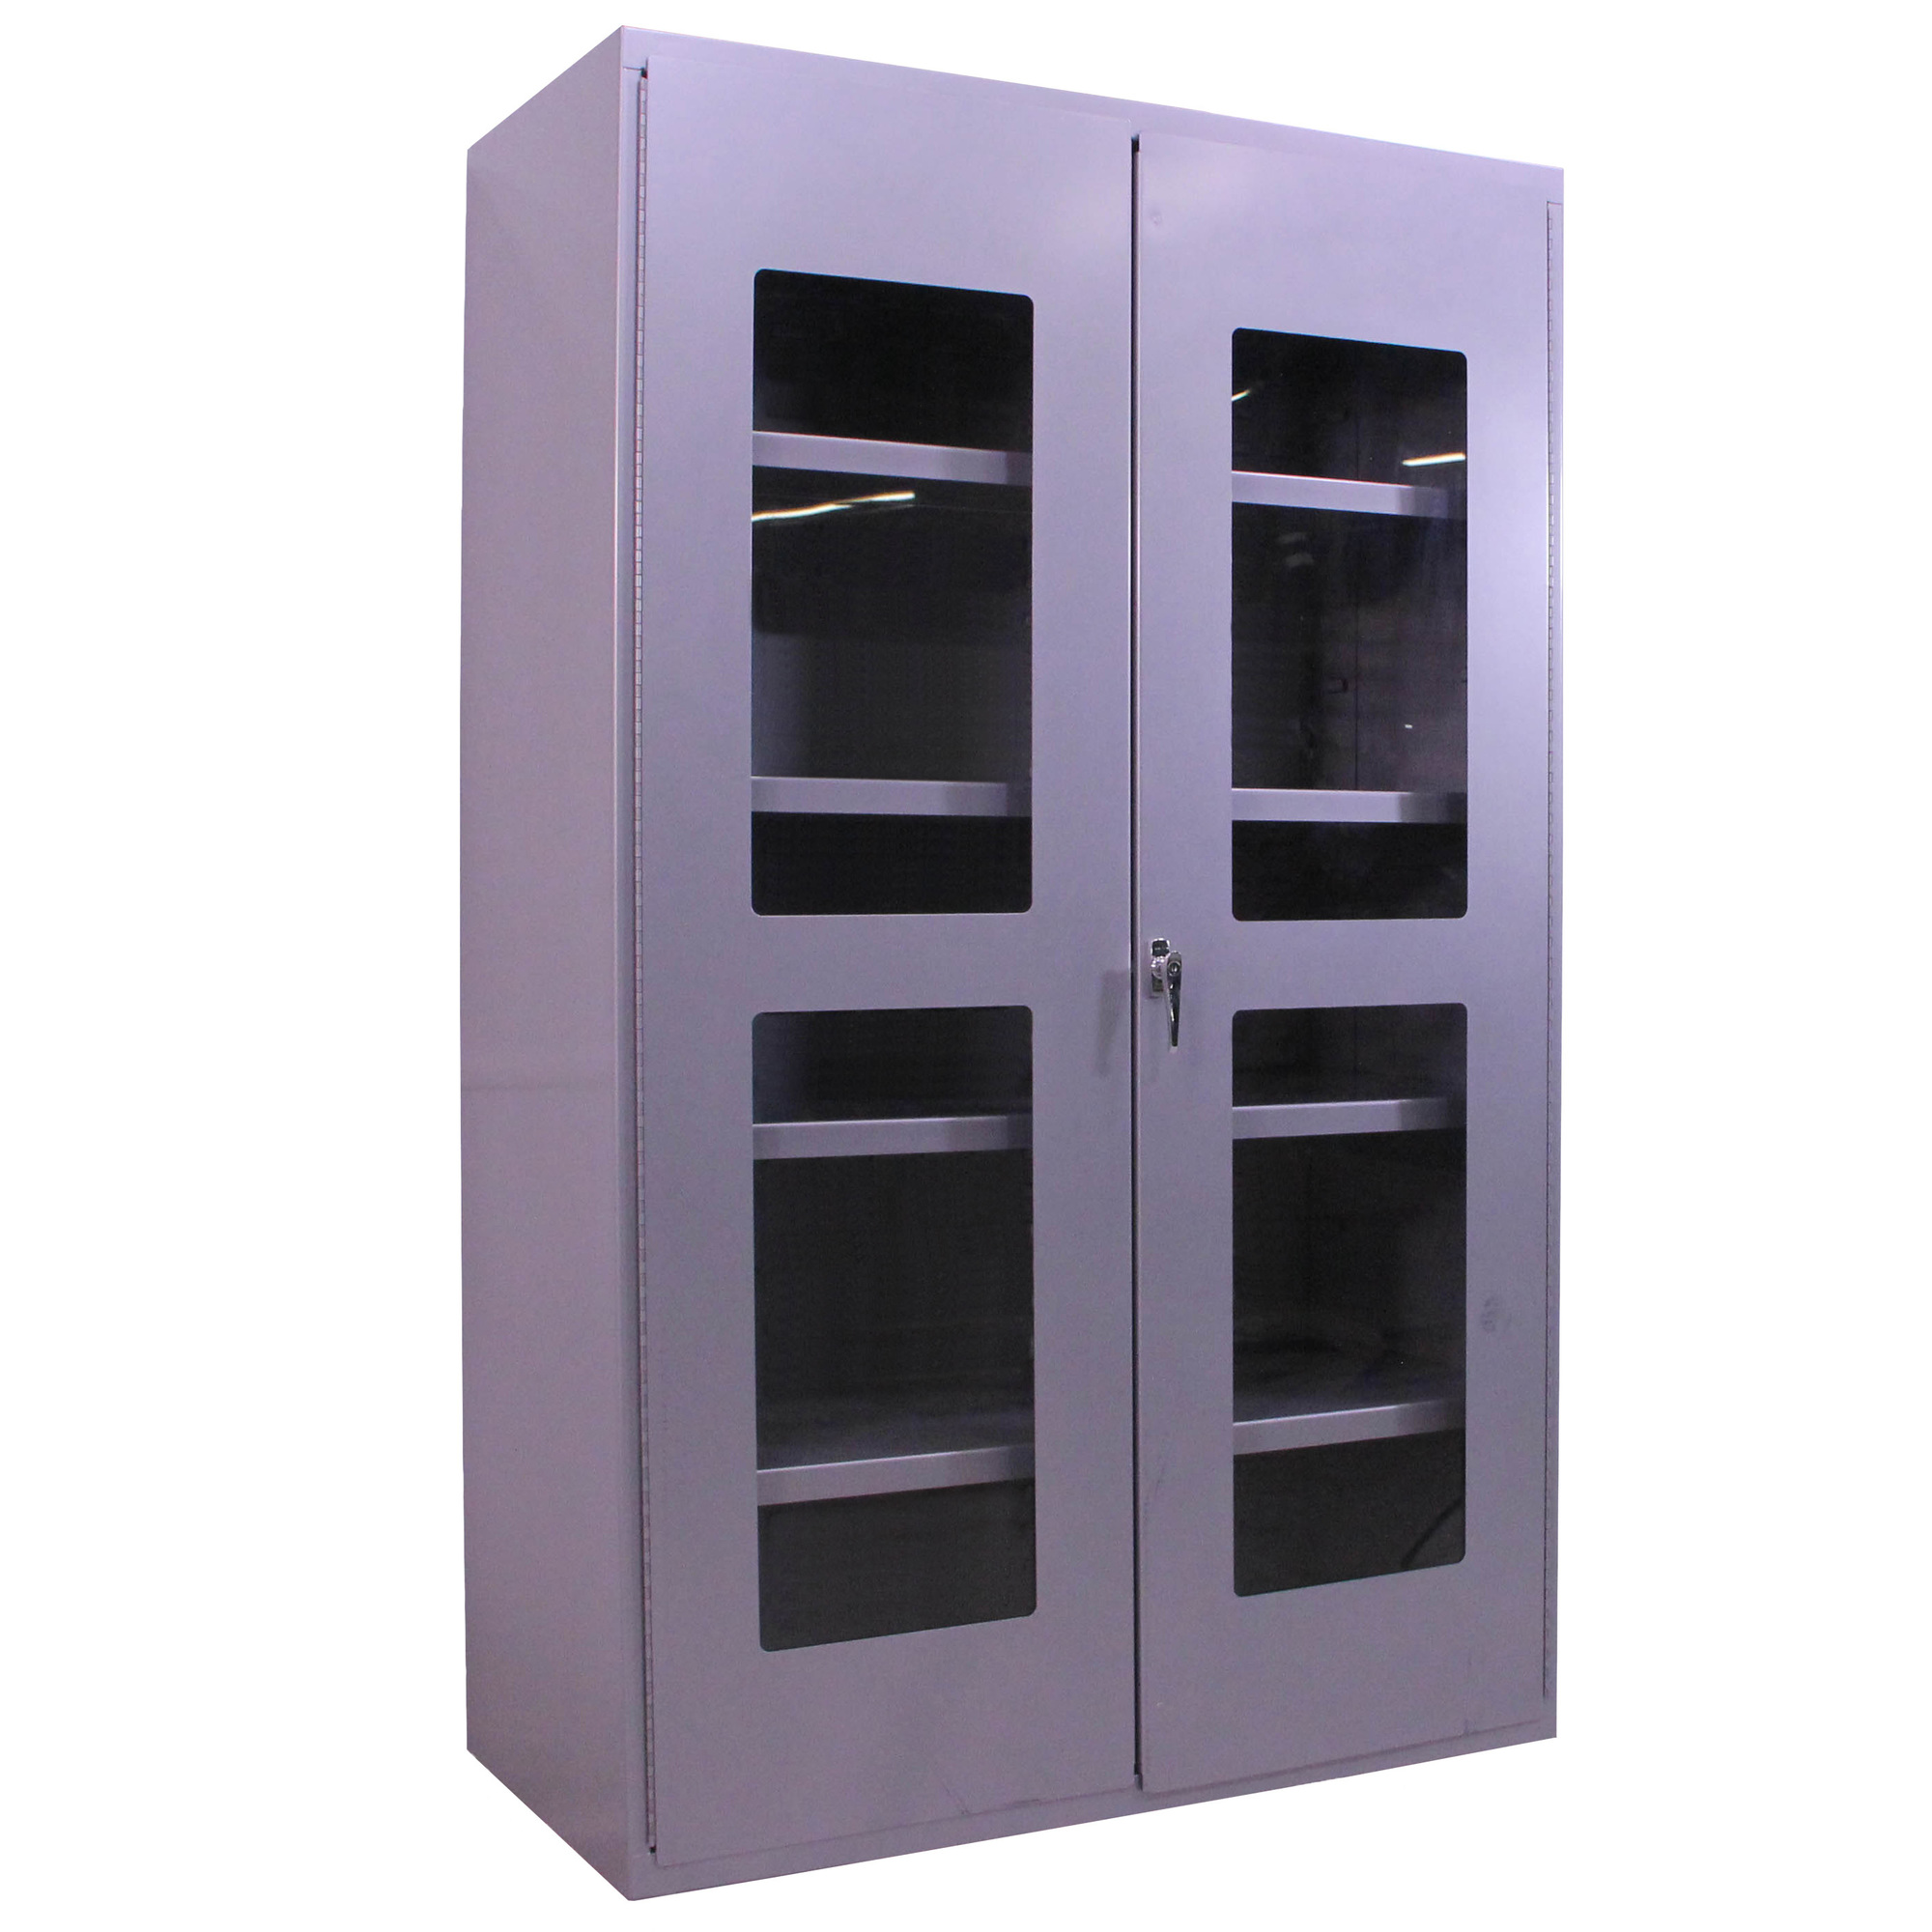 36in W x 24in D x 78in H Mobile Storage Cabinet by Sandusky Lee